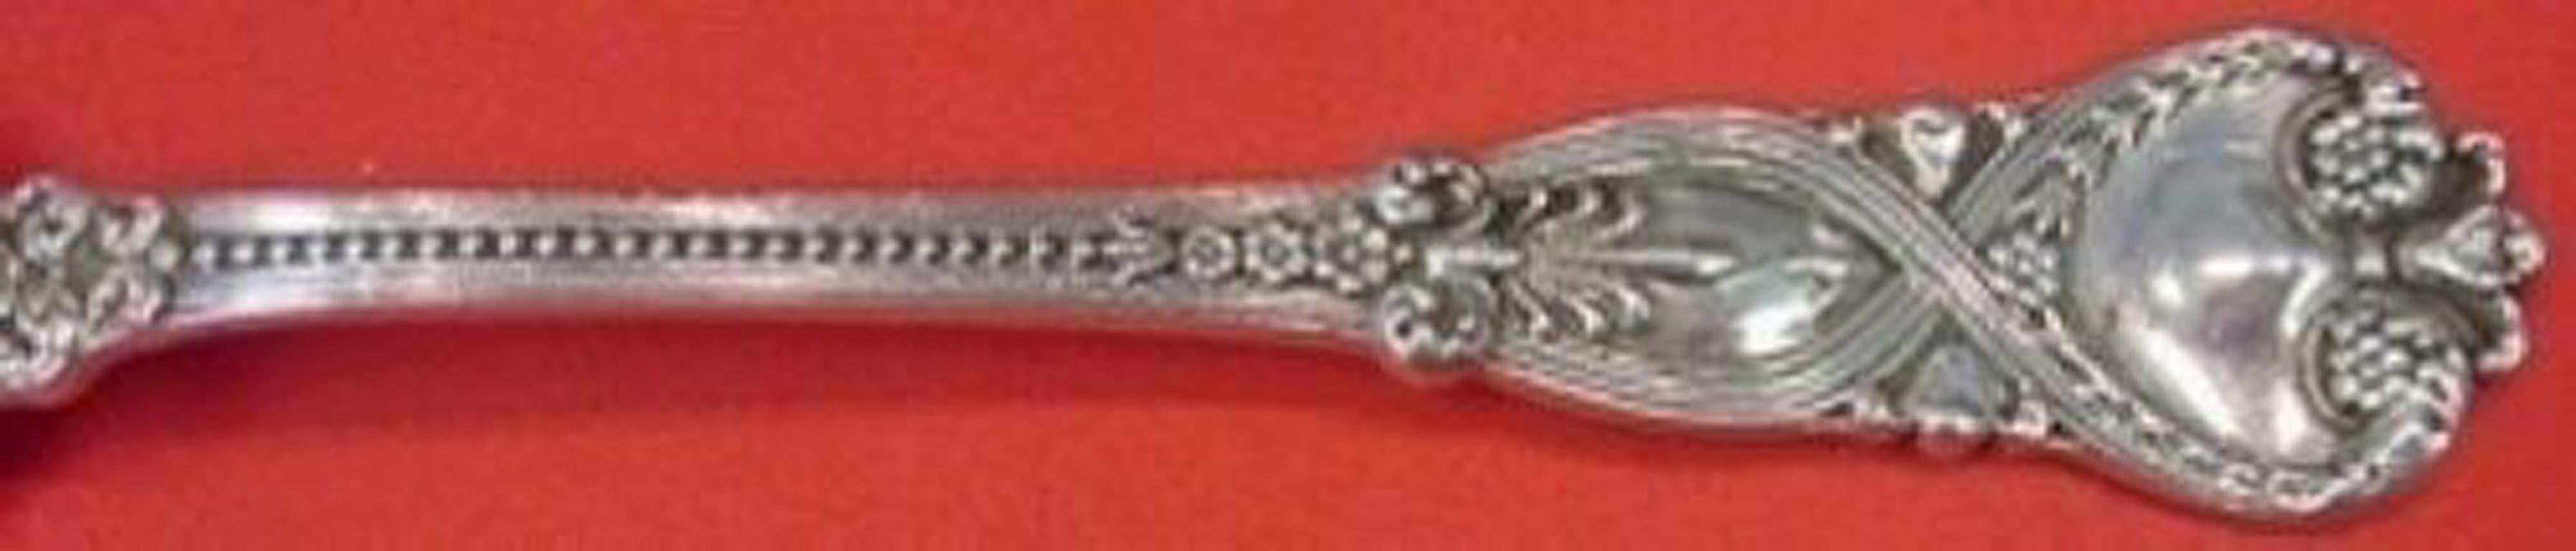 Sterling silver regular fork 6 7/8